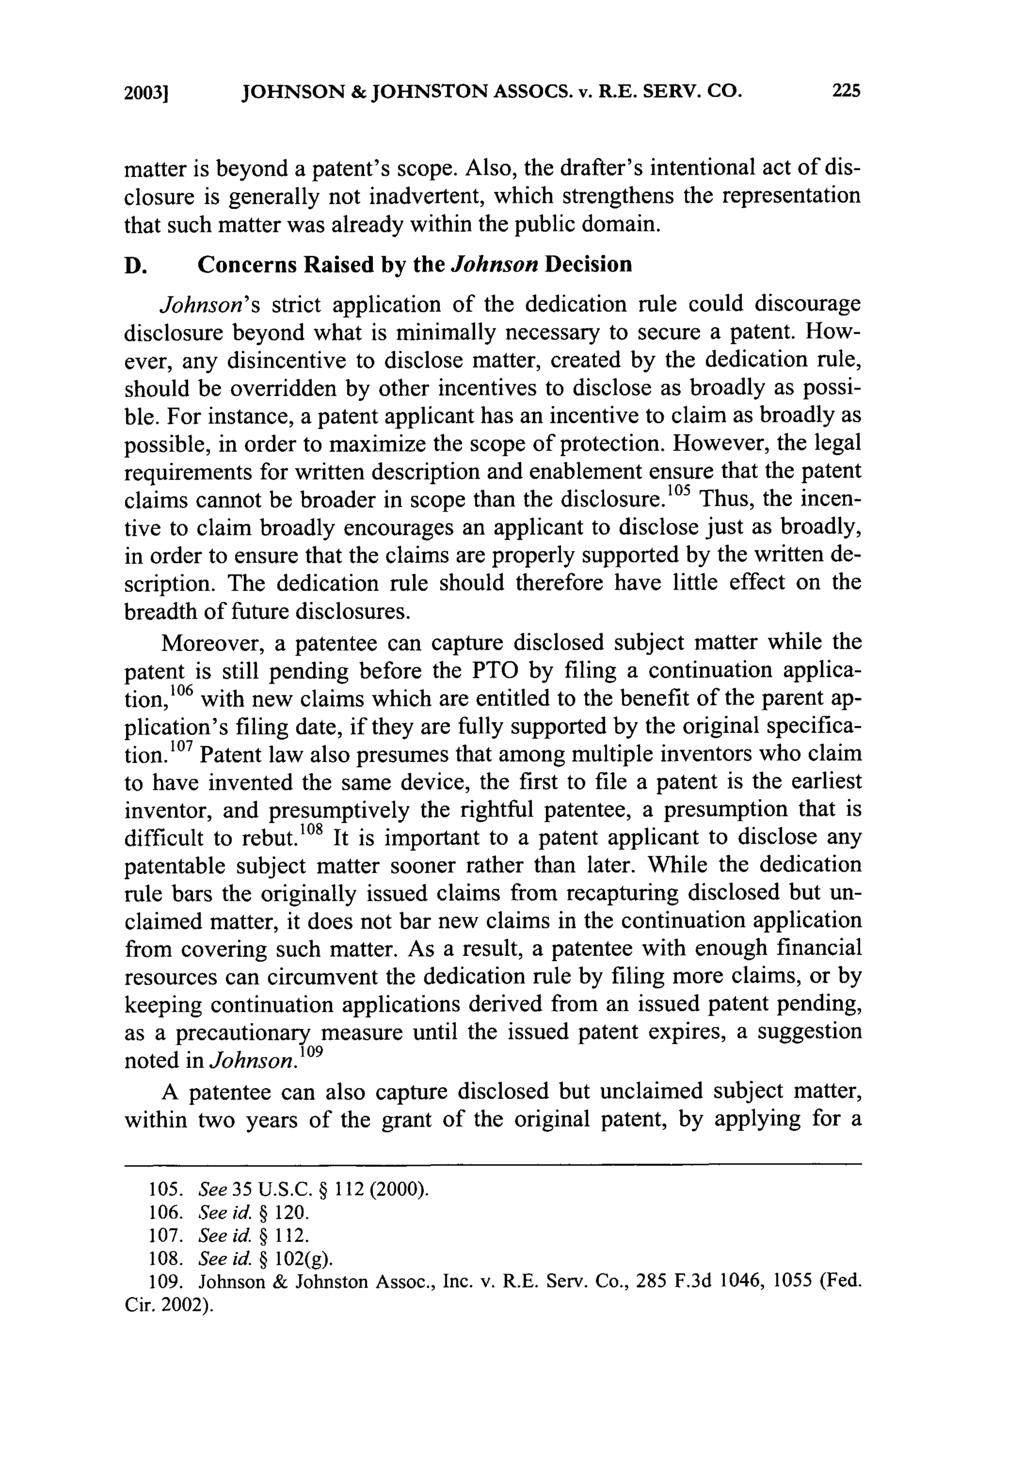 2003] JOHNSON & JOHNSTON ASSOCS. v. R.E. SERV. CO. matter is beyond a patent's scope.